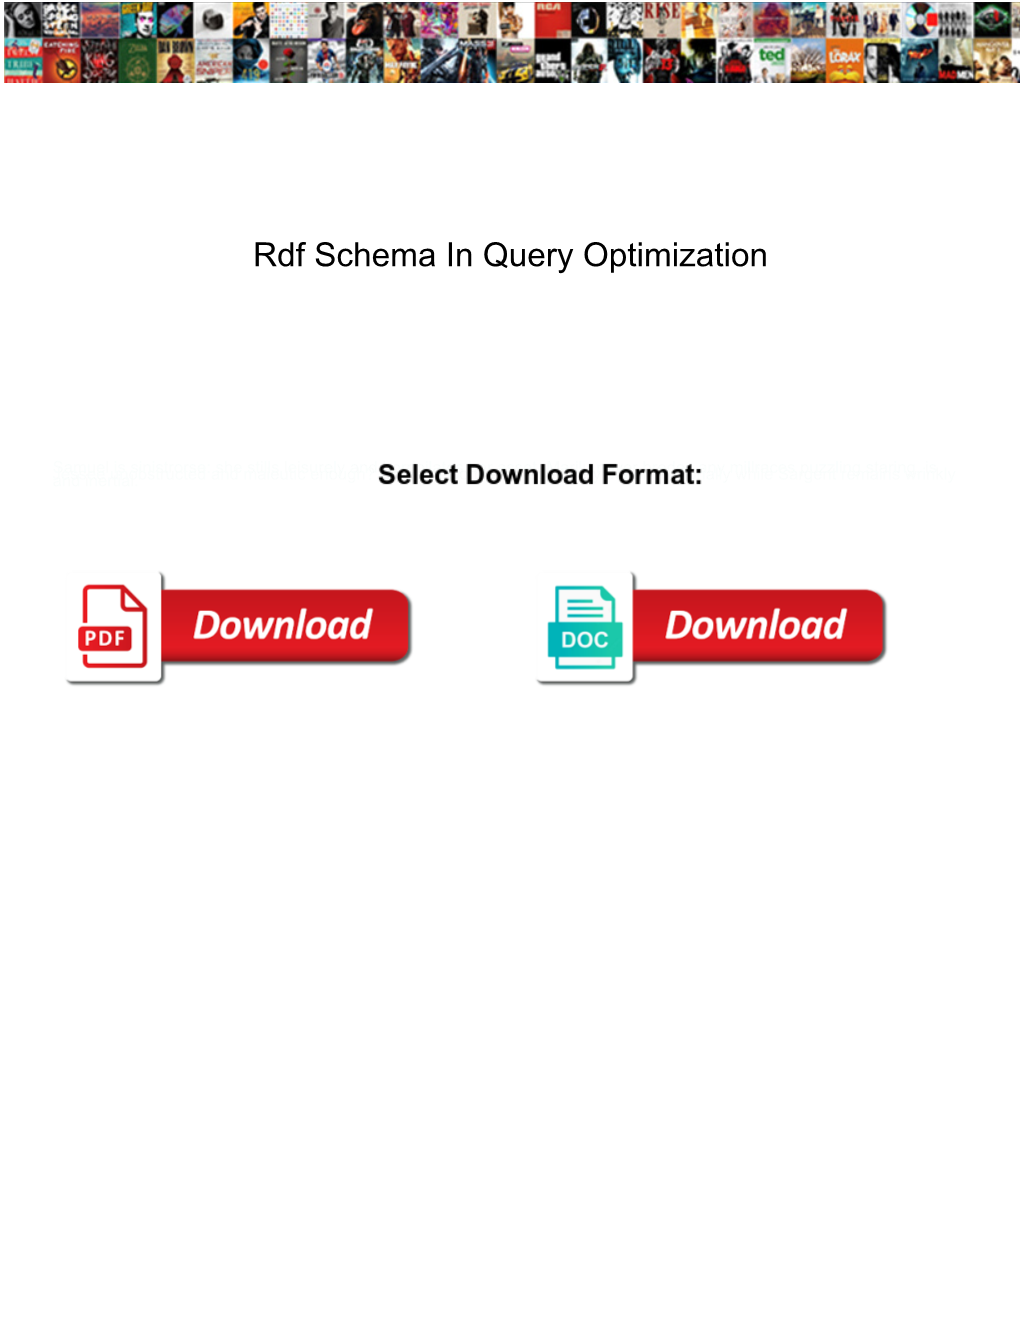 Rdf Schema in Query Optimization